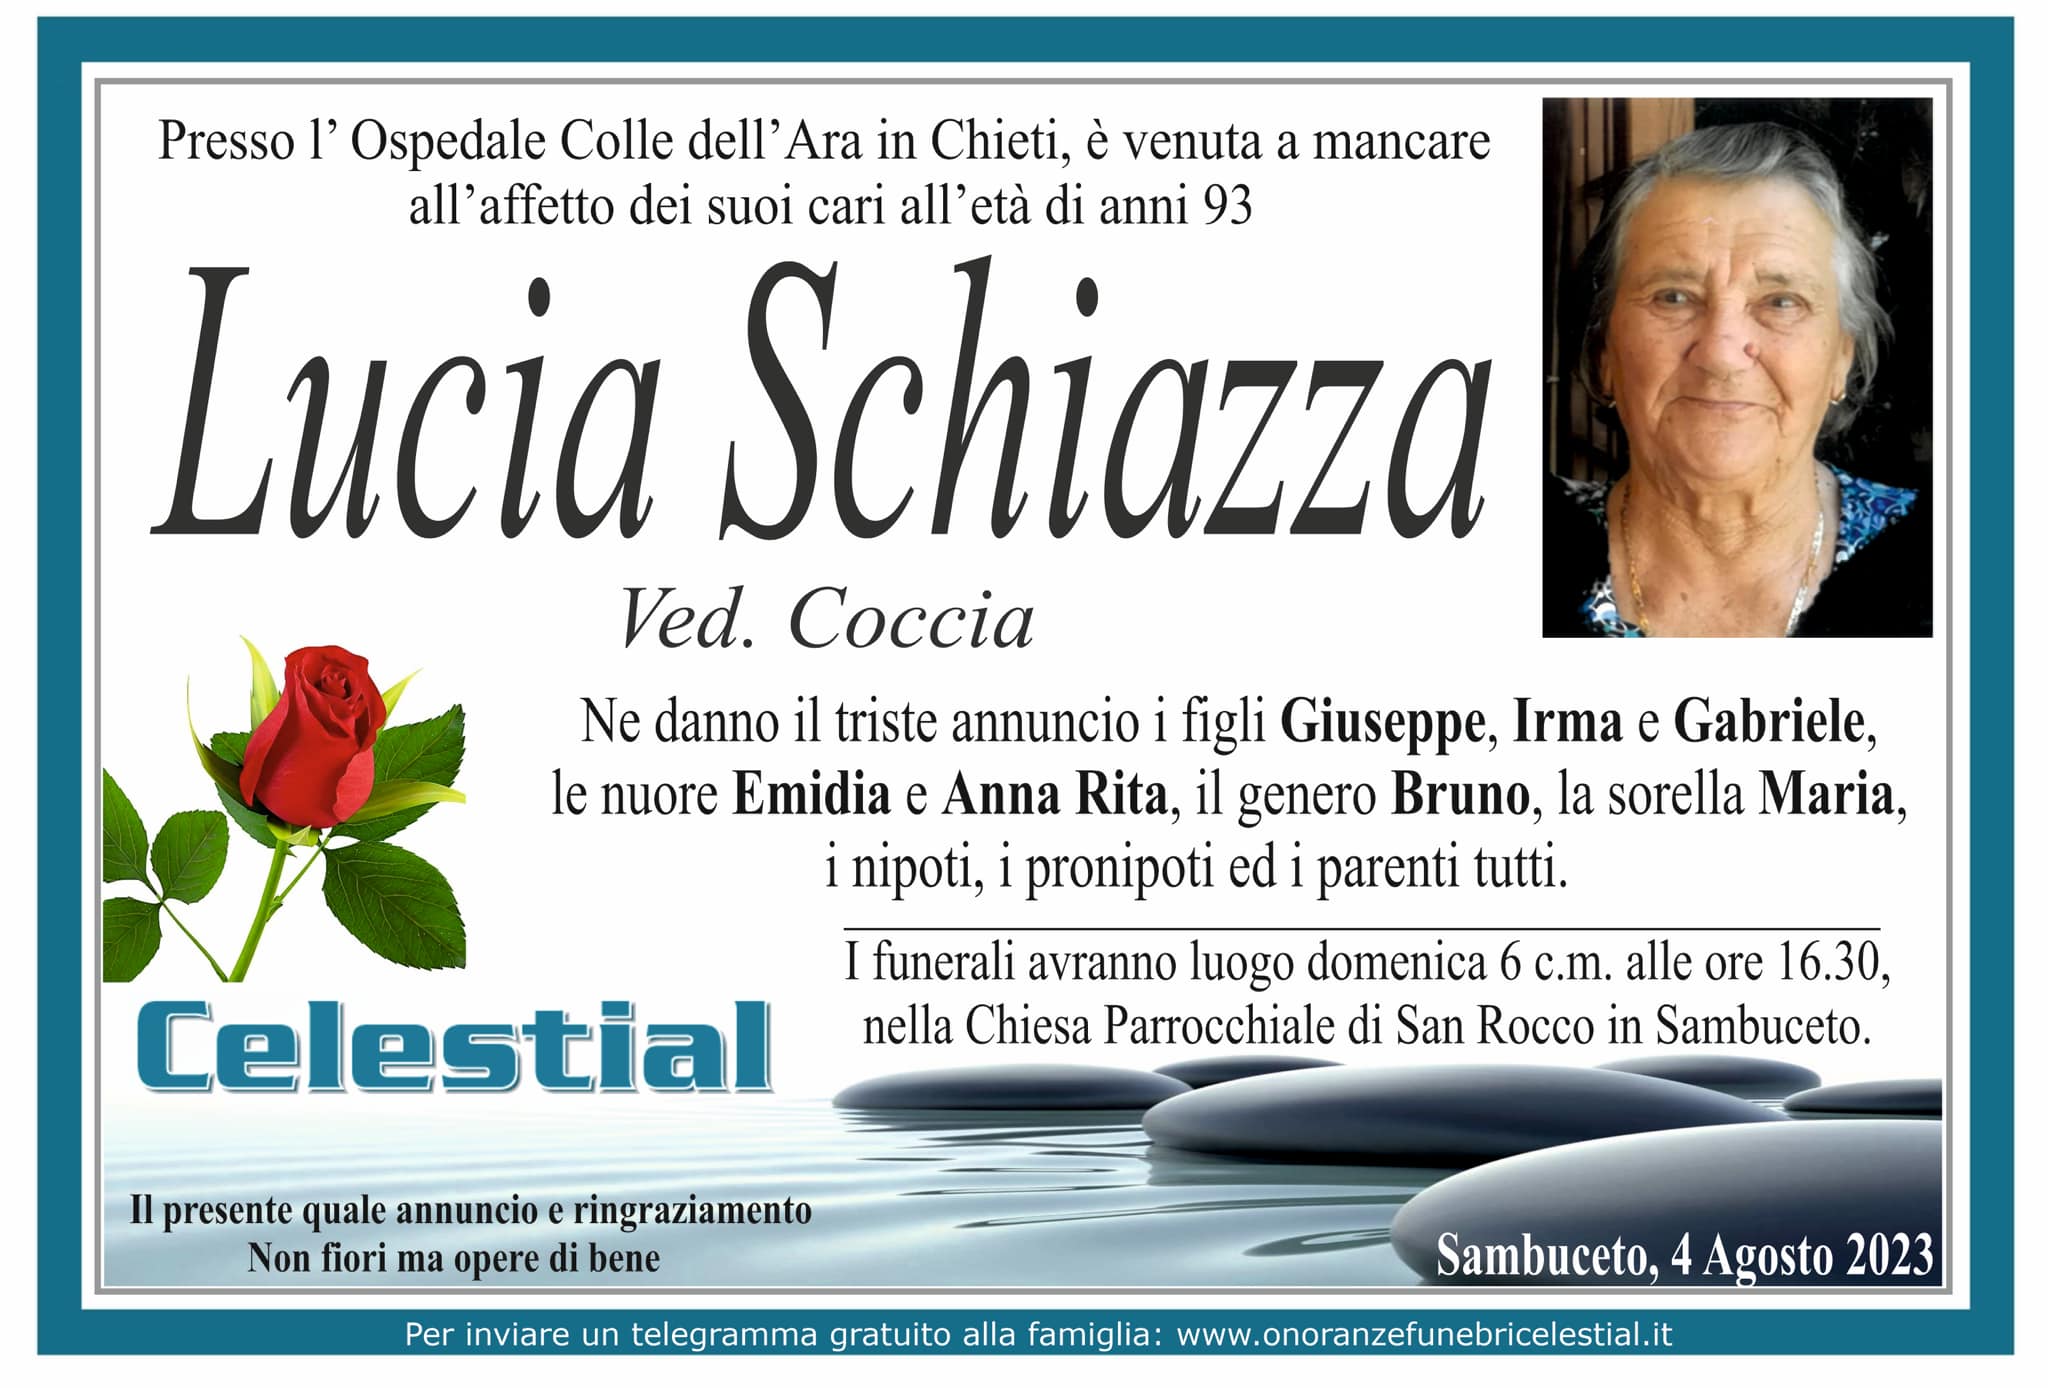 Lucia Schiazza